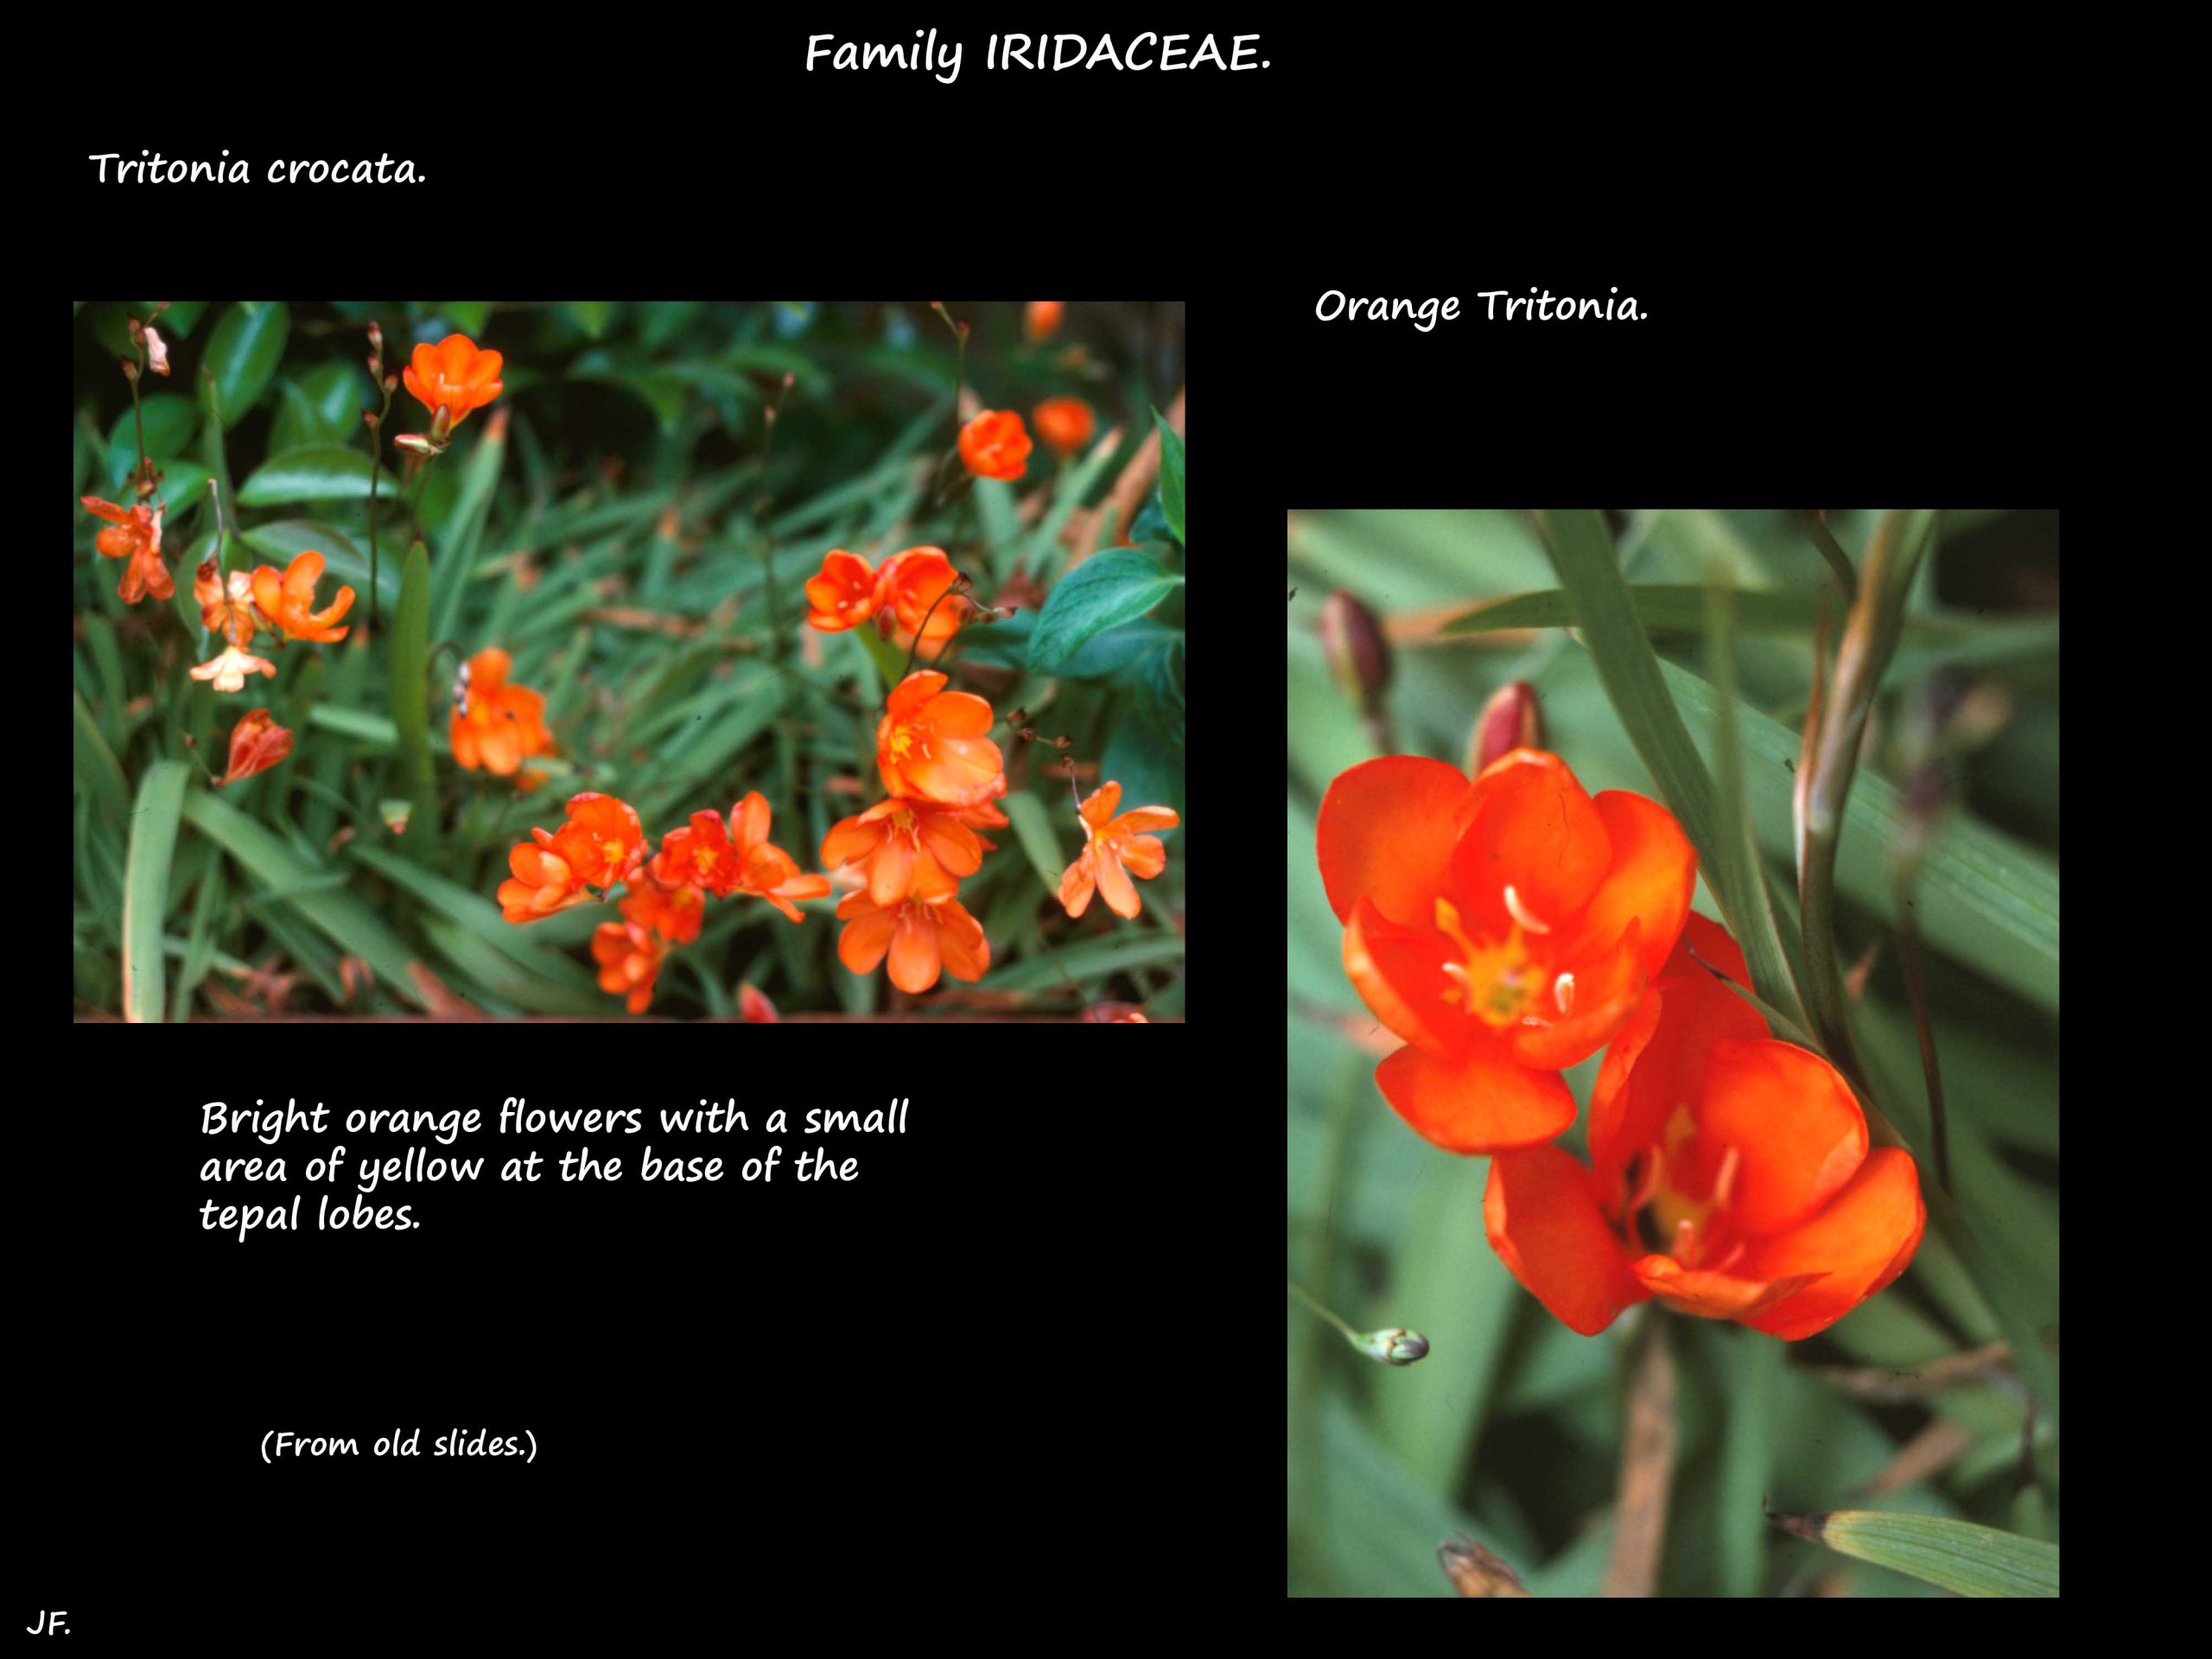 1 Tritonia crocata flowers